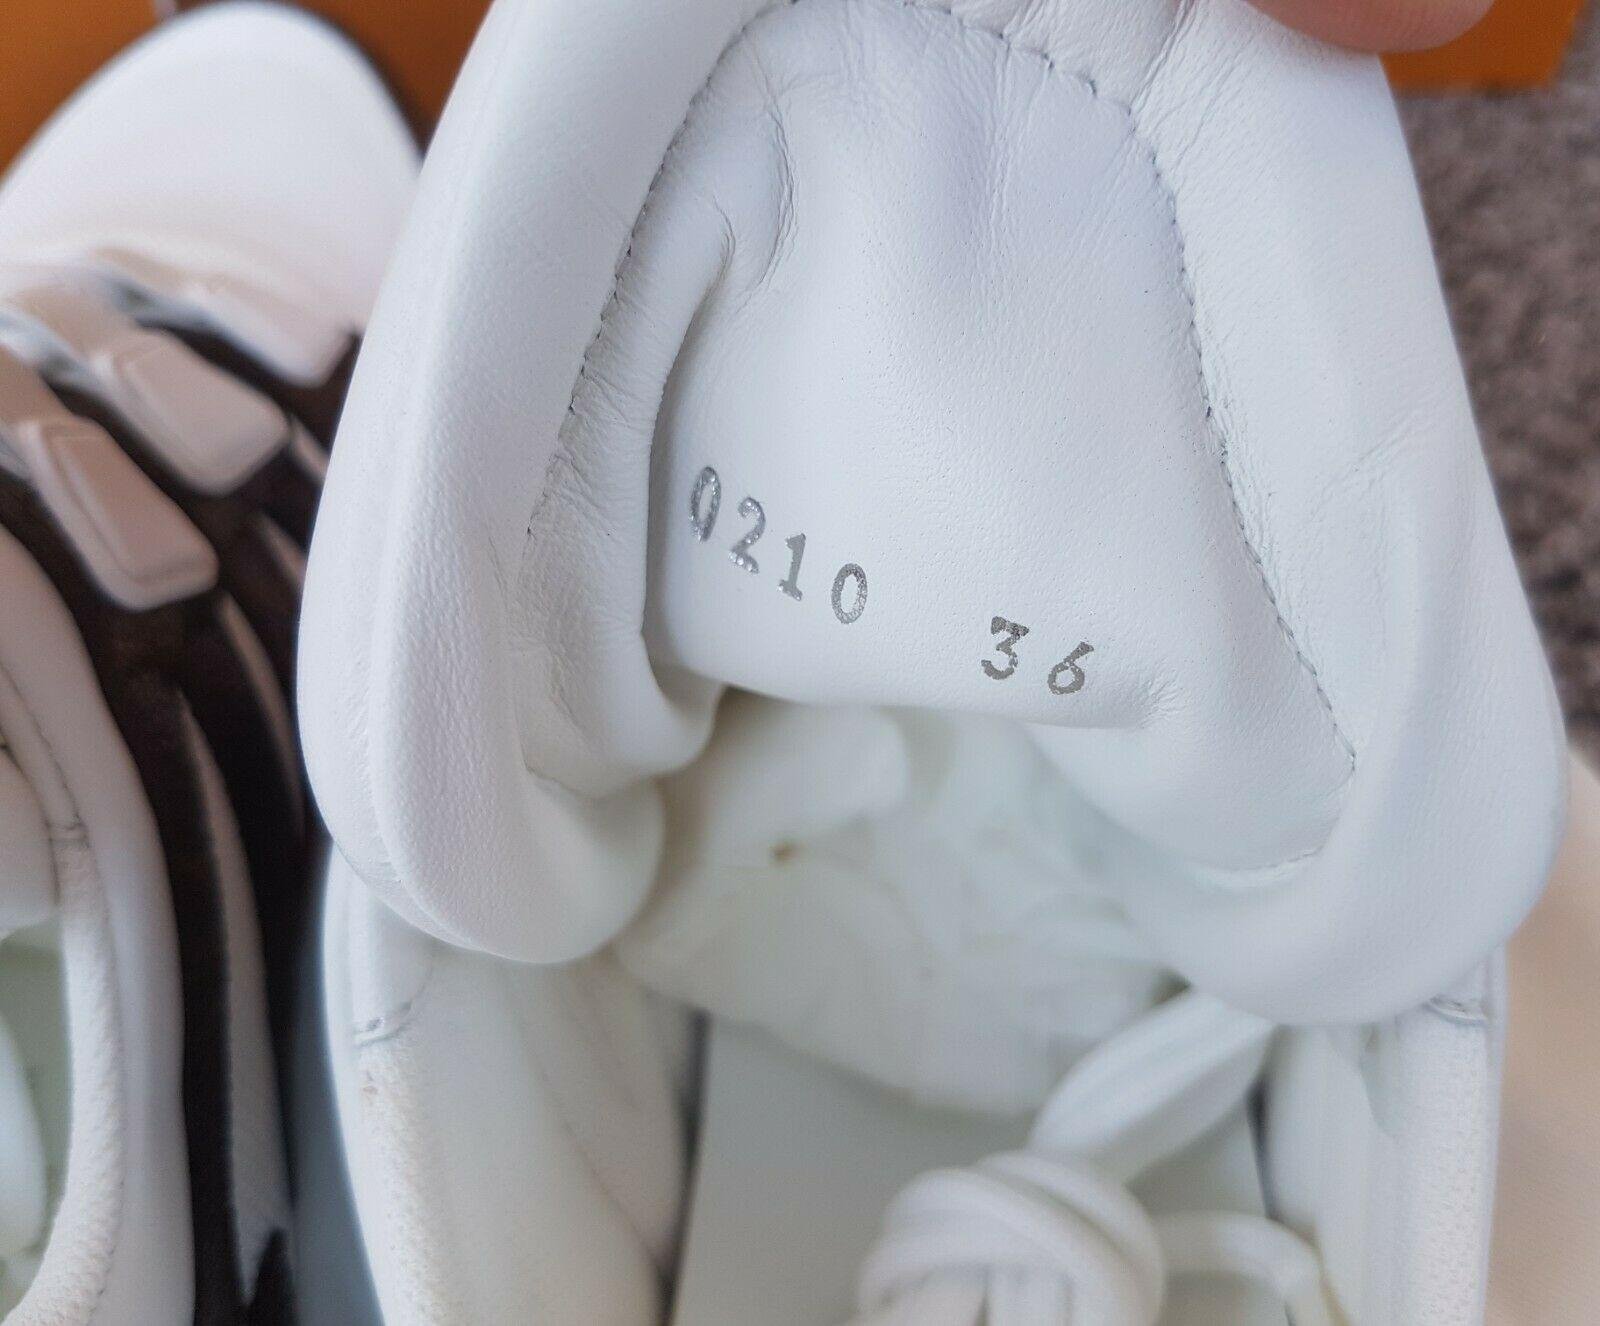               NEW Monogram ARCHLIGHT white RUNWAY brand luxury sneaker     hoes  5